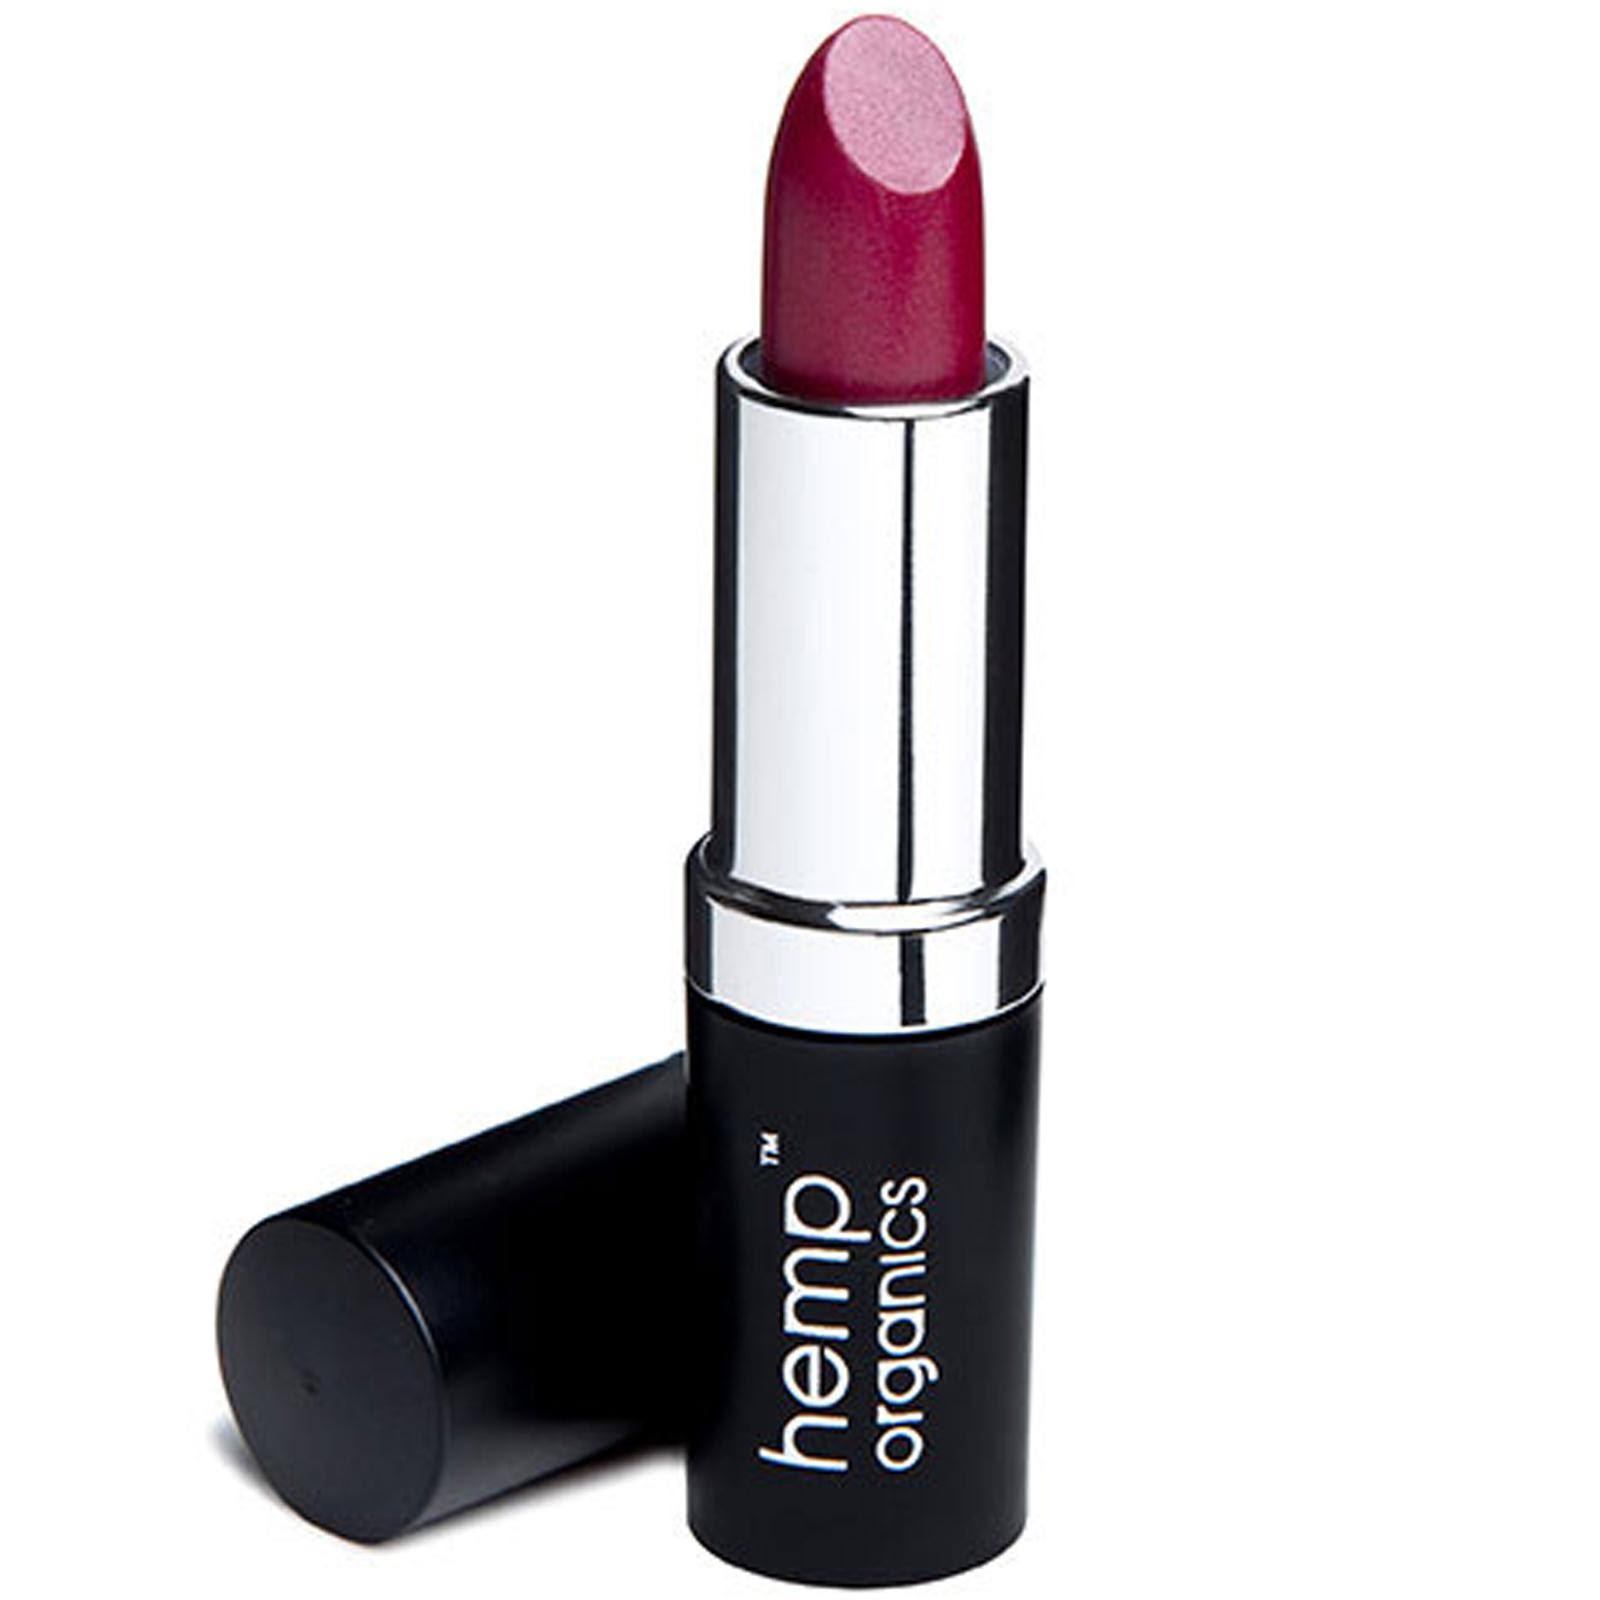 Colorganics Hemp Organics Lipstick - 5ml, Wild Plum